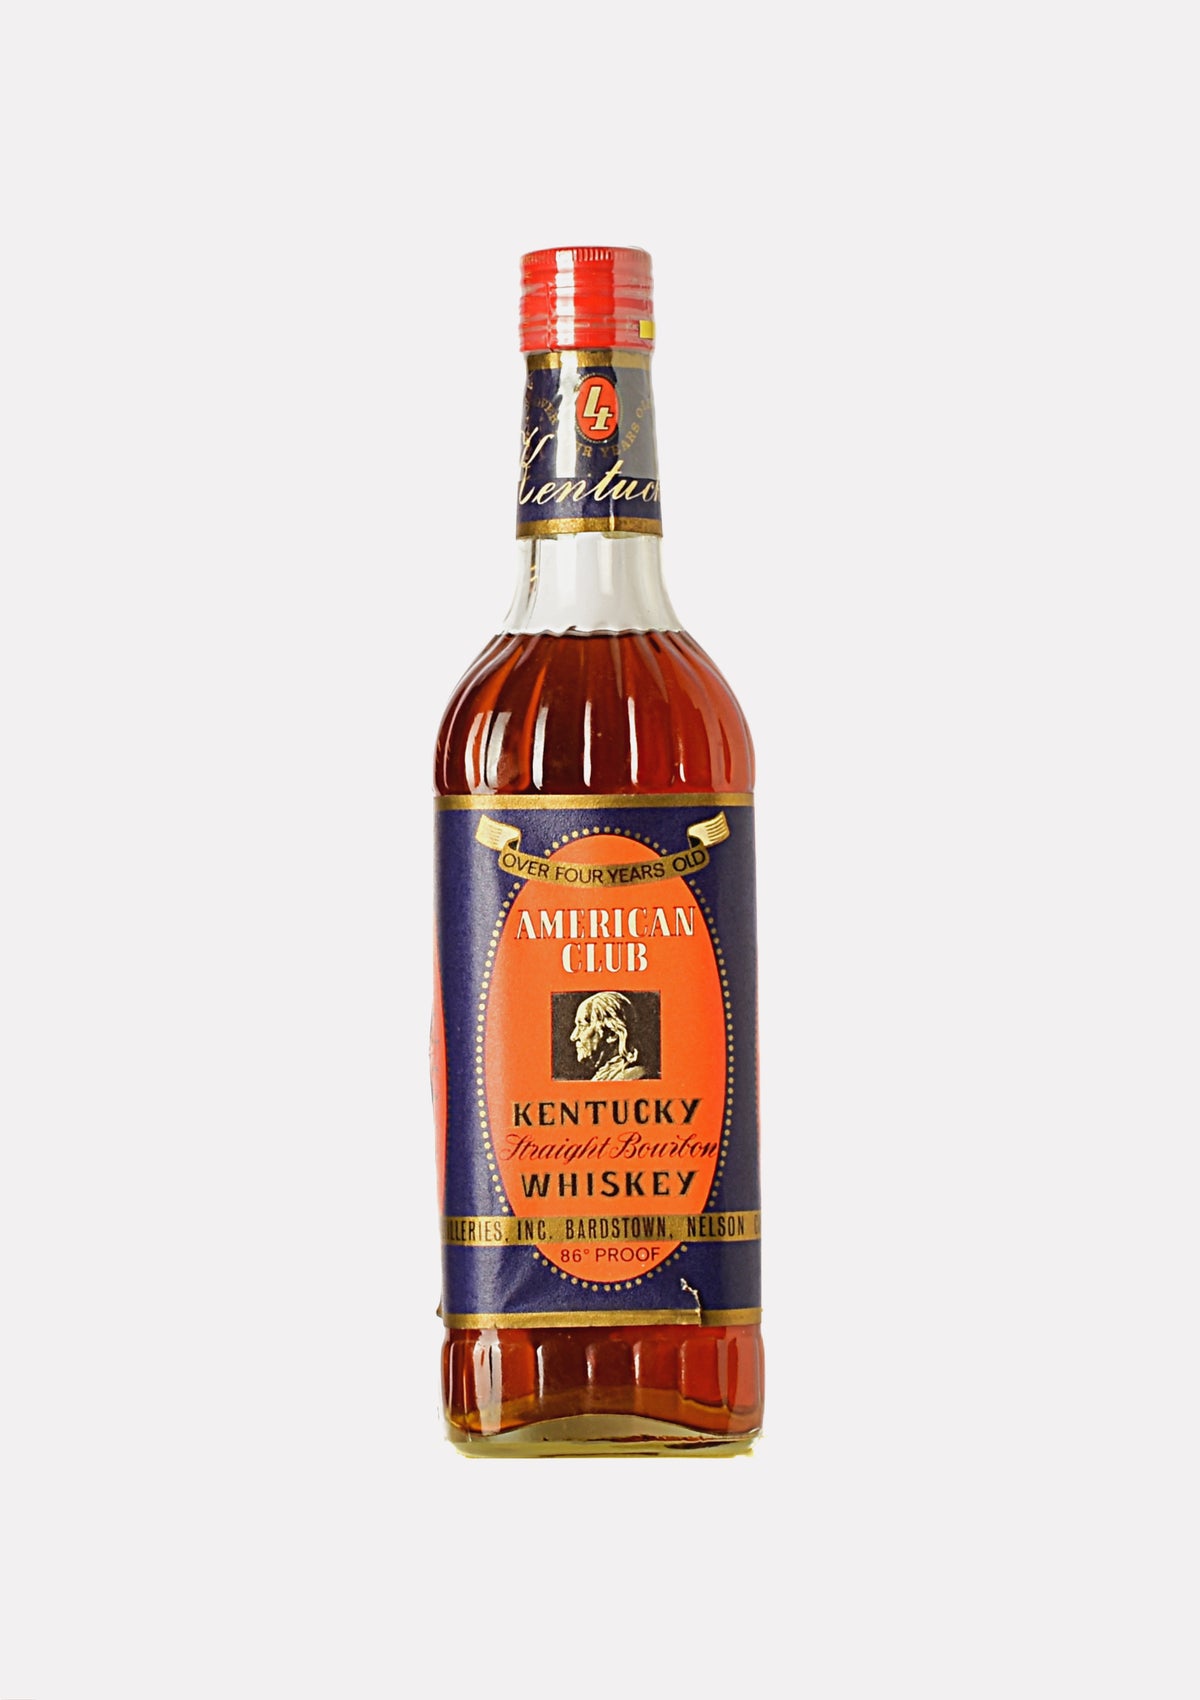 American Club Kentucky Straight Bourbon Whiskey 4 Jahre